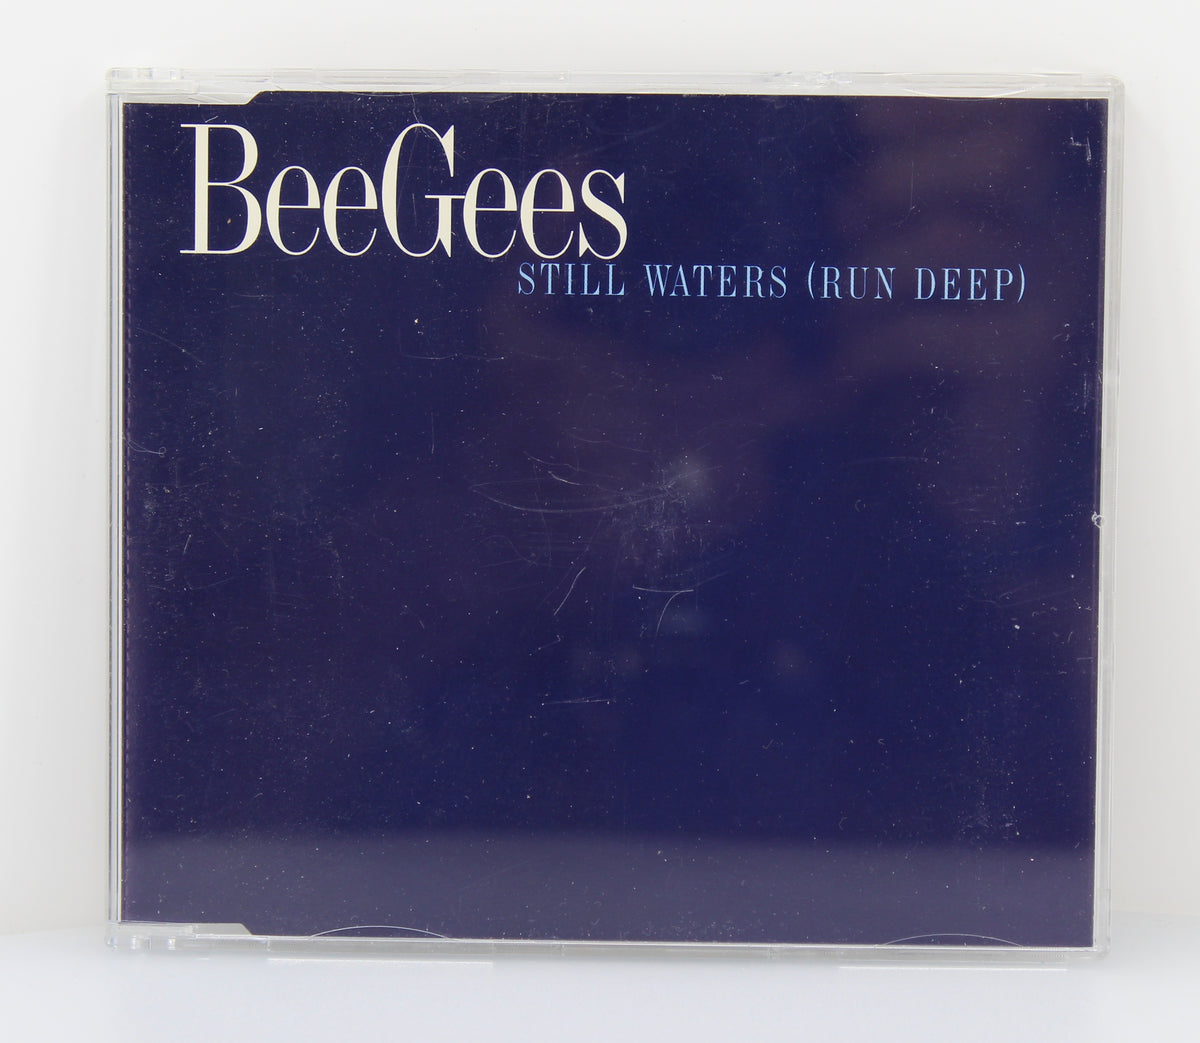 Bee Gees – Still Waters (Run Deep), CD, Single, Promo, UK 1997